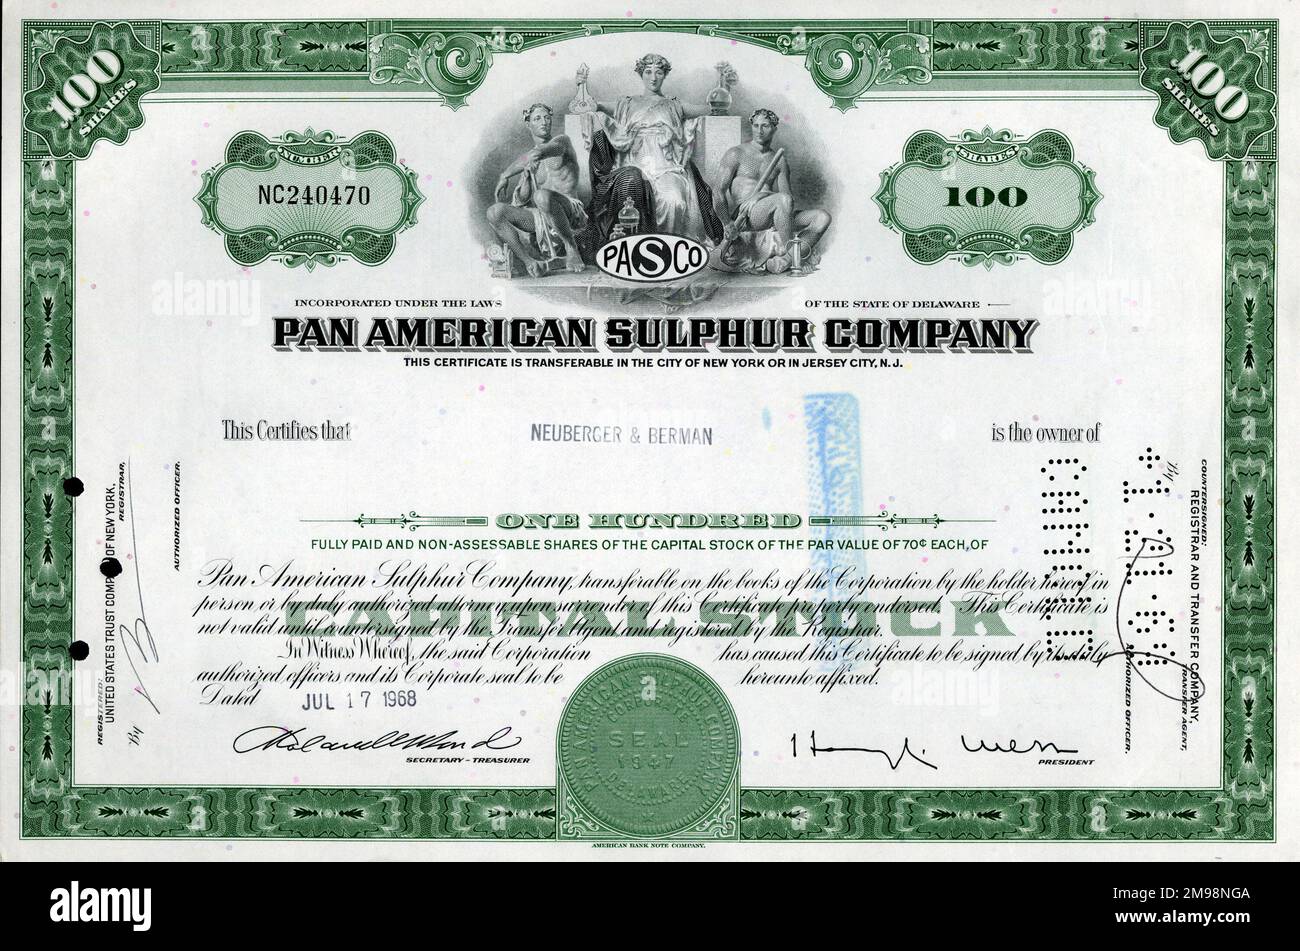 Stock Share Certificate - Pan American Sulphur Company, 100 shares. Stock Photo